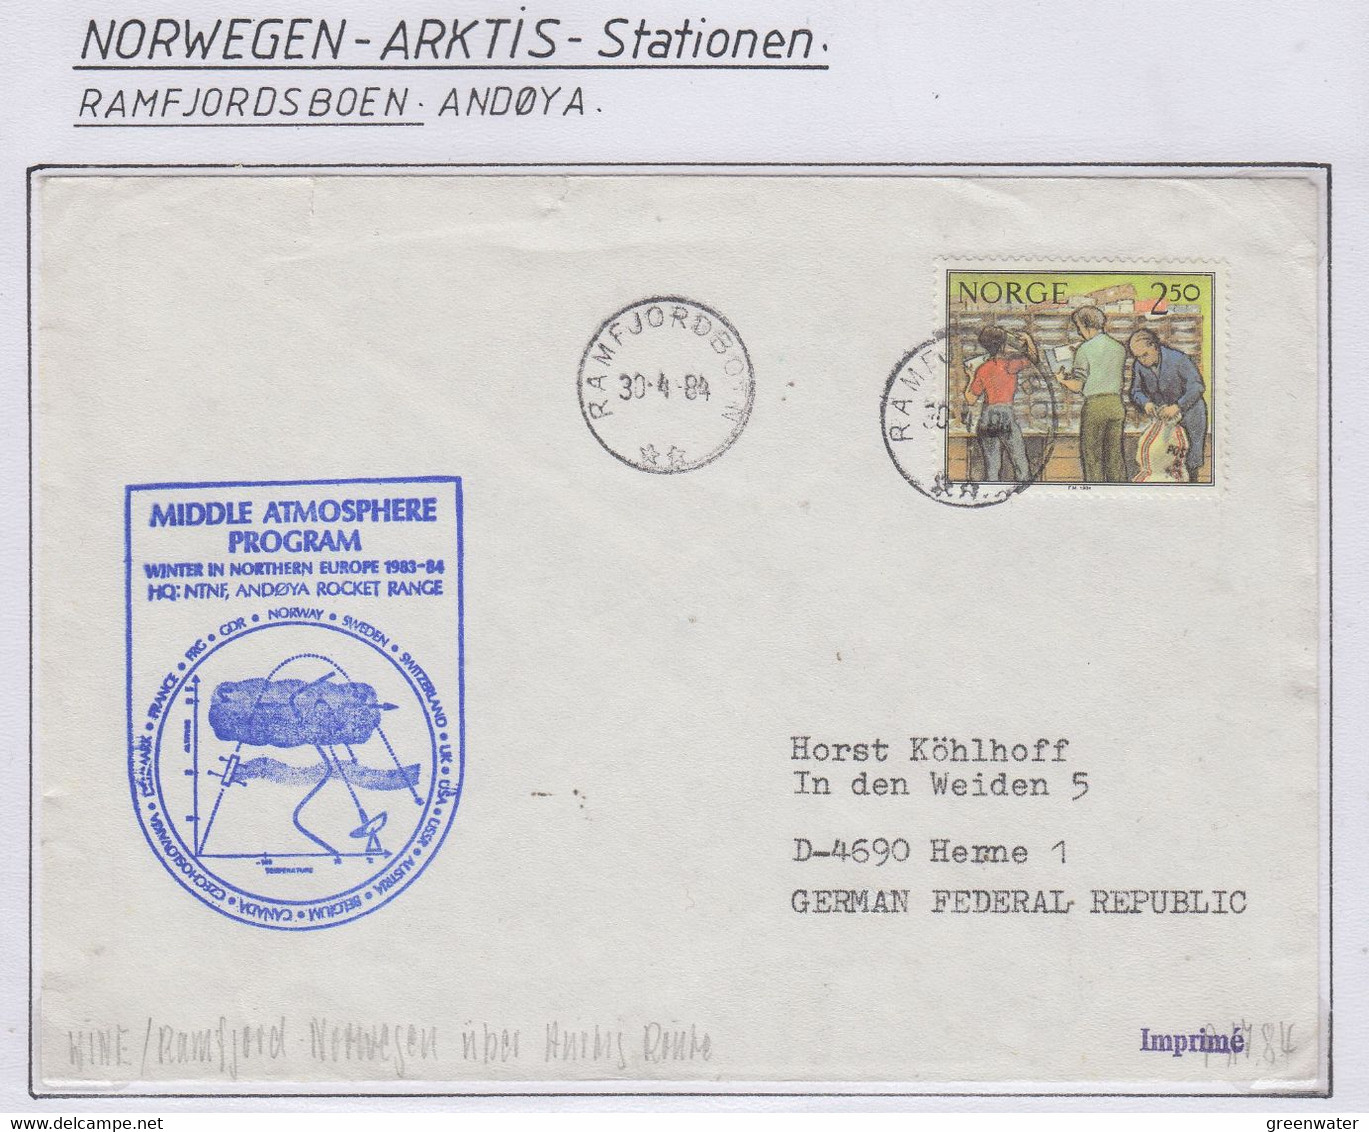 Norway 1984 Andoya Rocket Range Cover Ca Ramfjordsbotn 30.4.1984 (NI206) - Covers & Documents